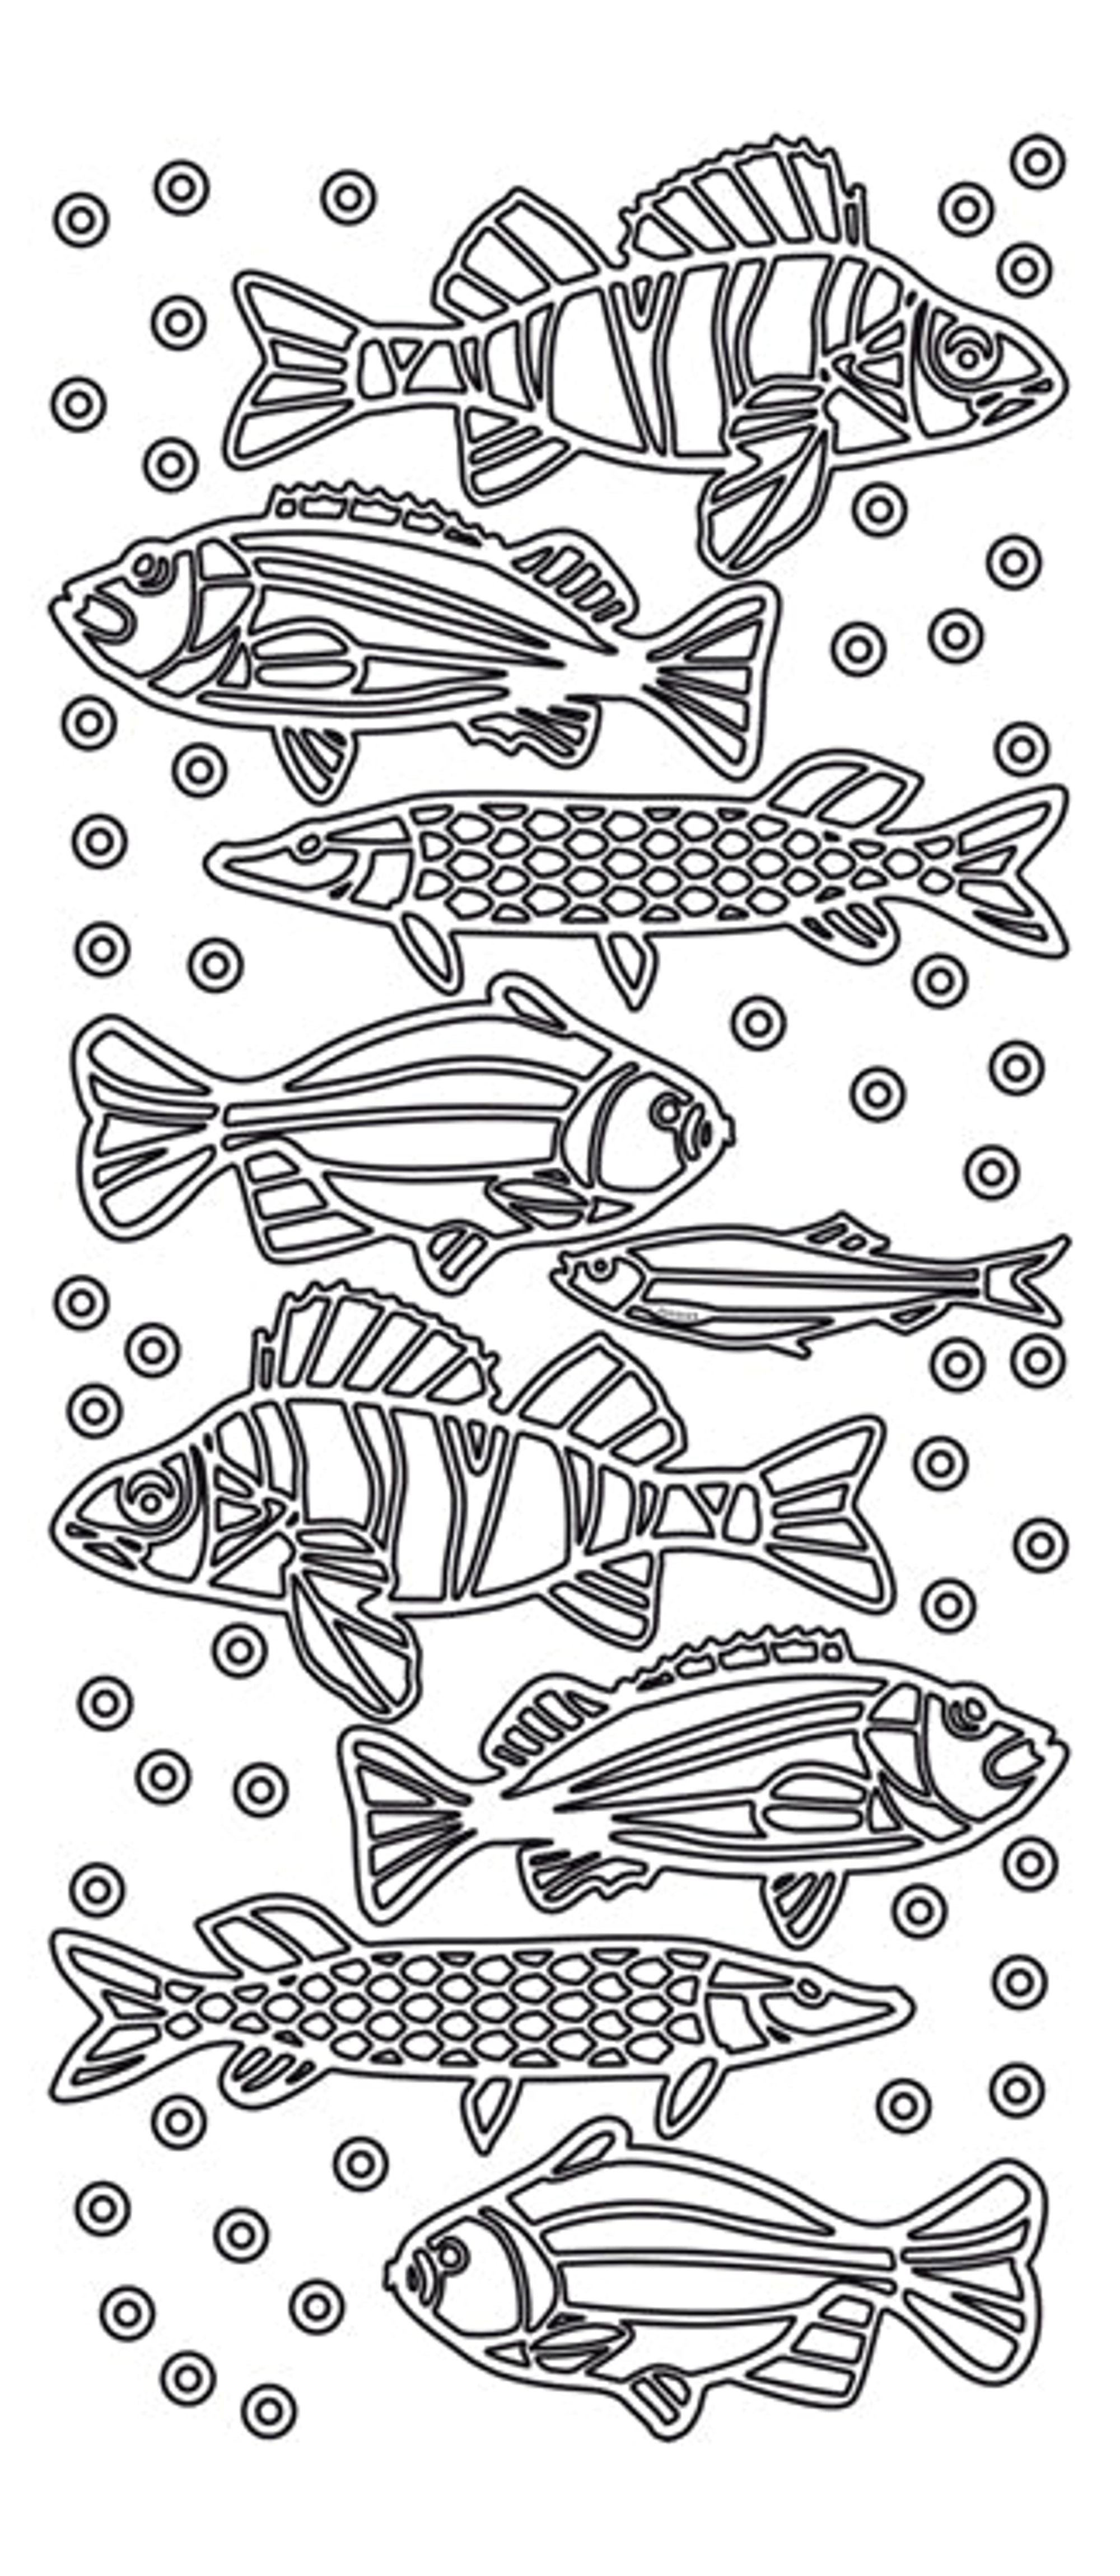 Peel-Off Stickers - Fish